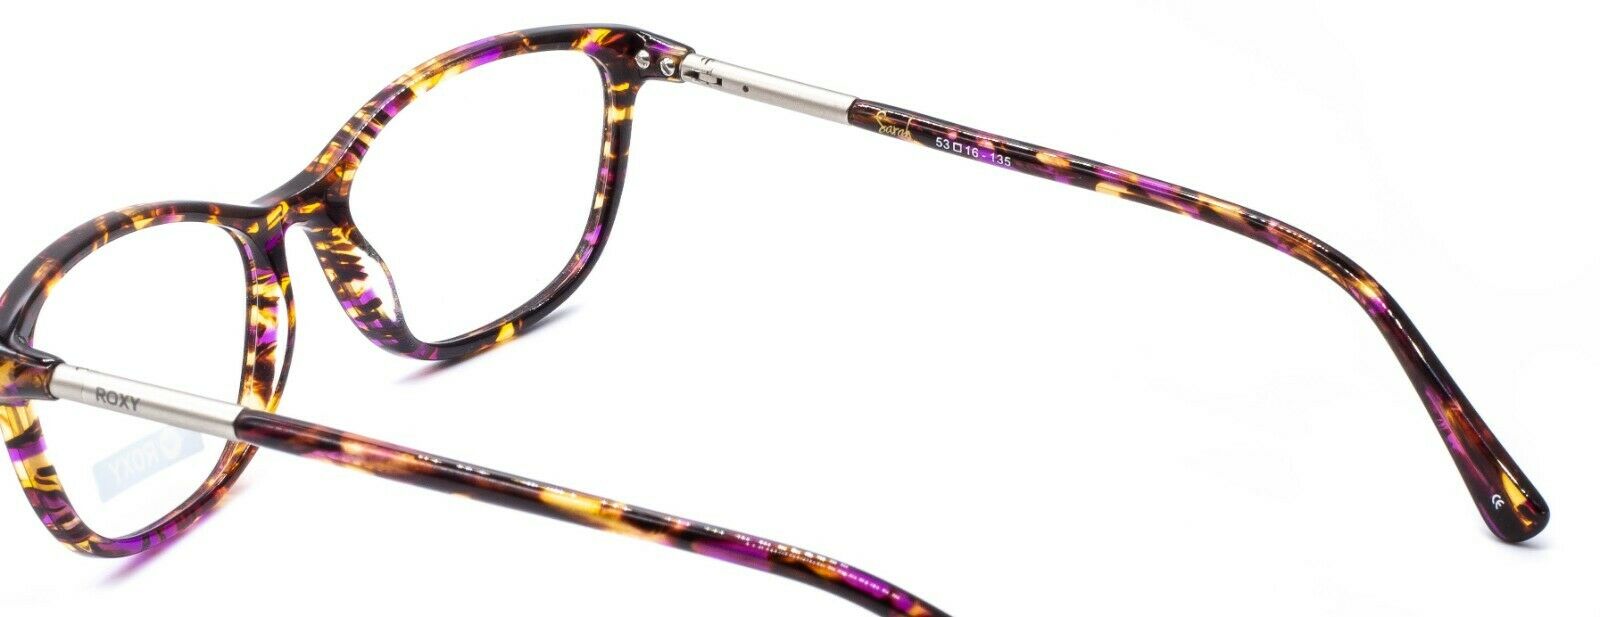 ROXY ERJEG00004/PUR Sarah 53mm Eyewear FRAMES Glasses RX Optical Eyeglasses New